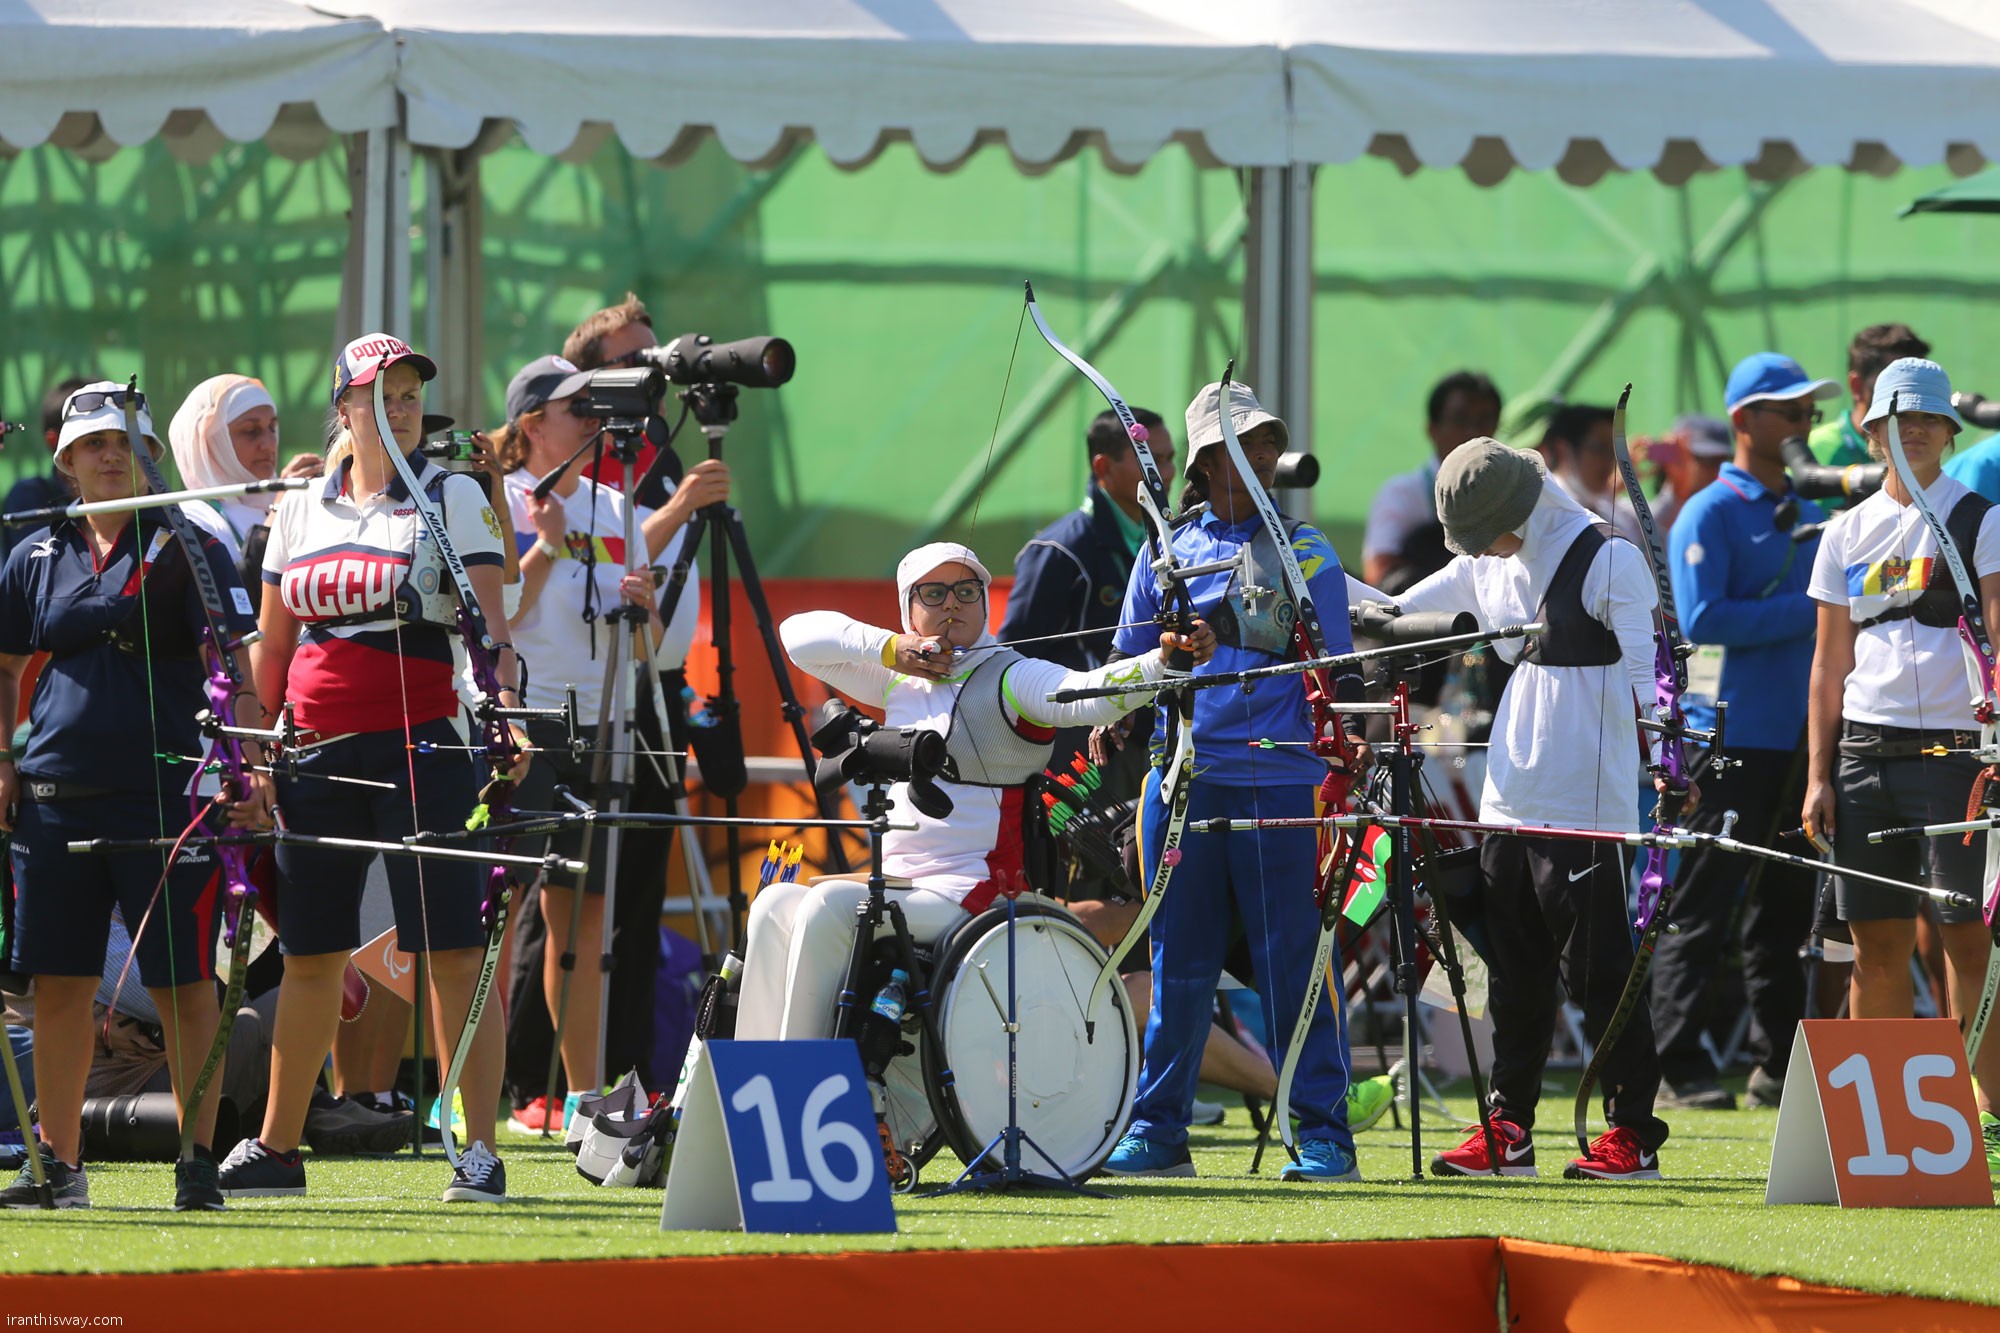 IPC selects Zahra Nemati Iranian paralympics archer as best athlete